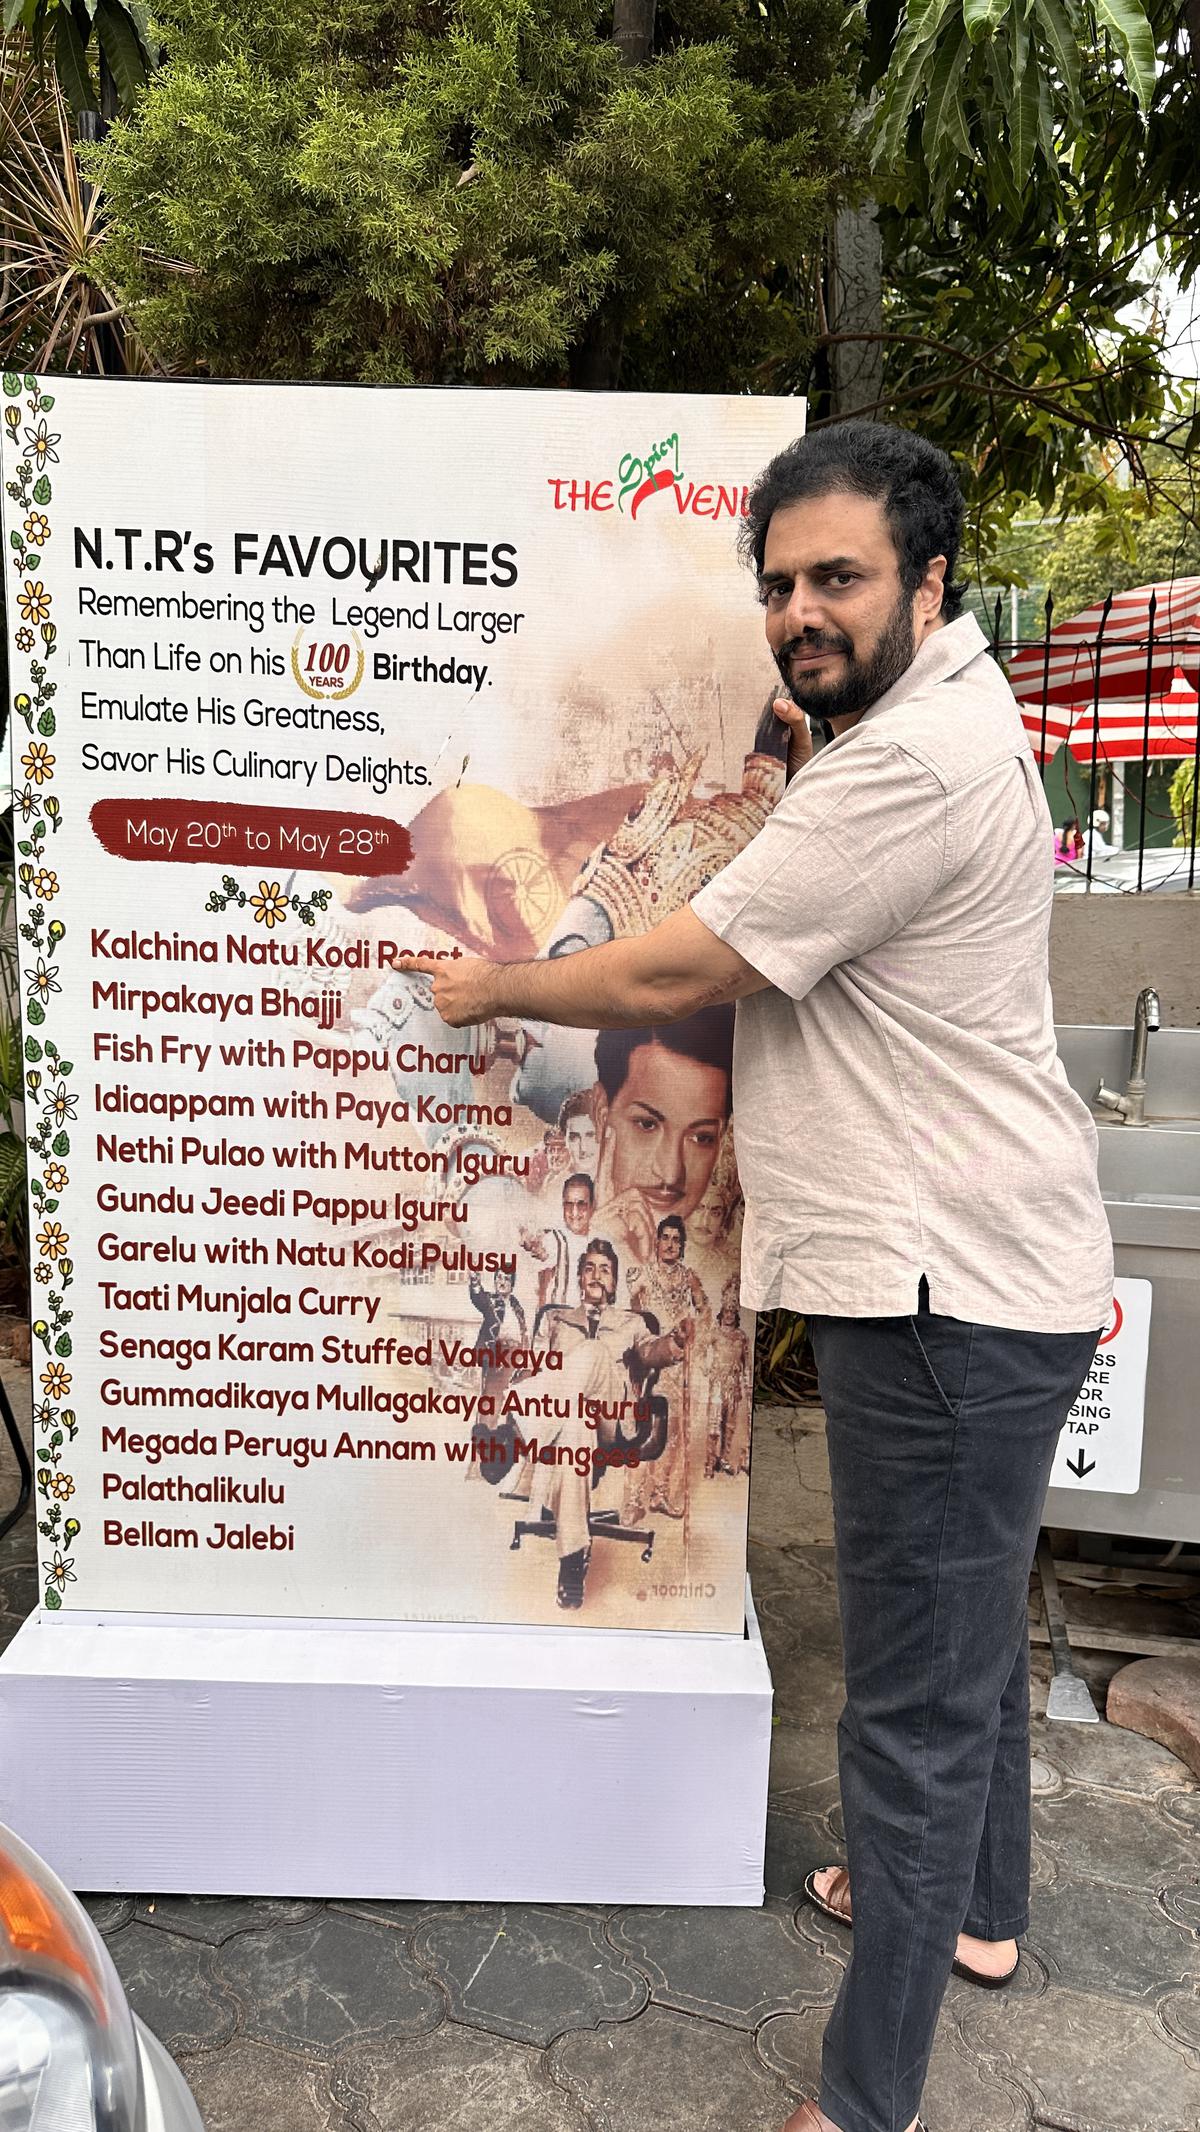 NTR’s grandson Chaitanya Krishna (son of Jaya Krishna) was at the food fest to celebrate his birthday 